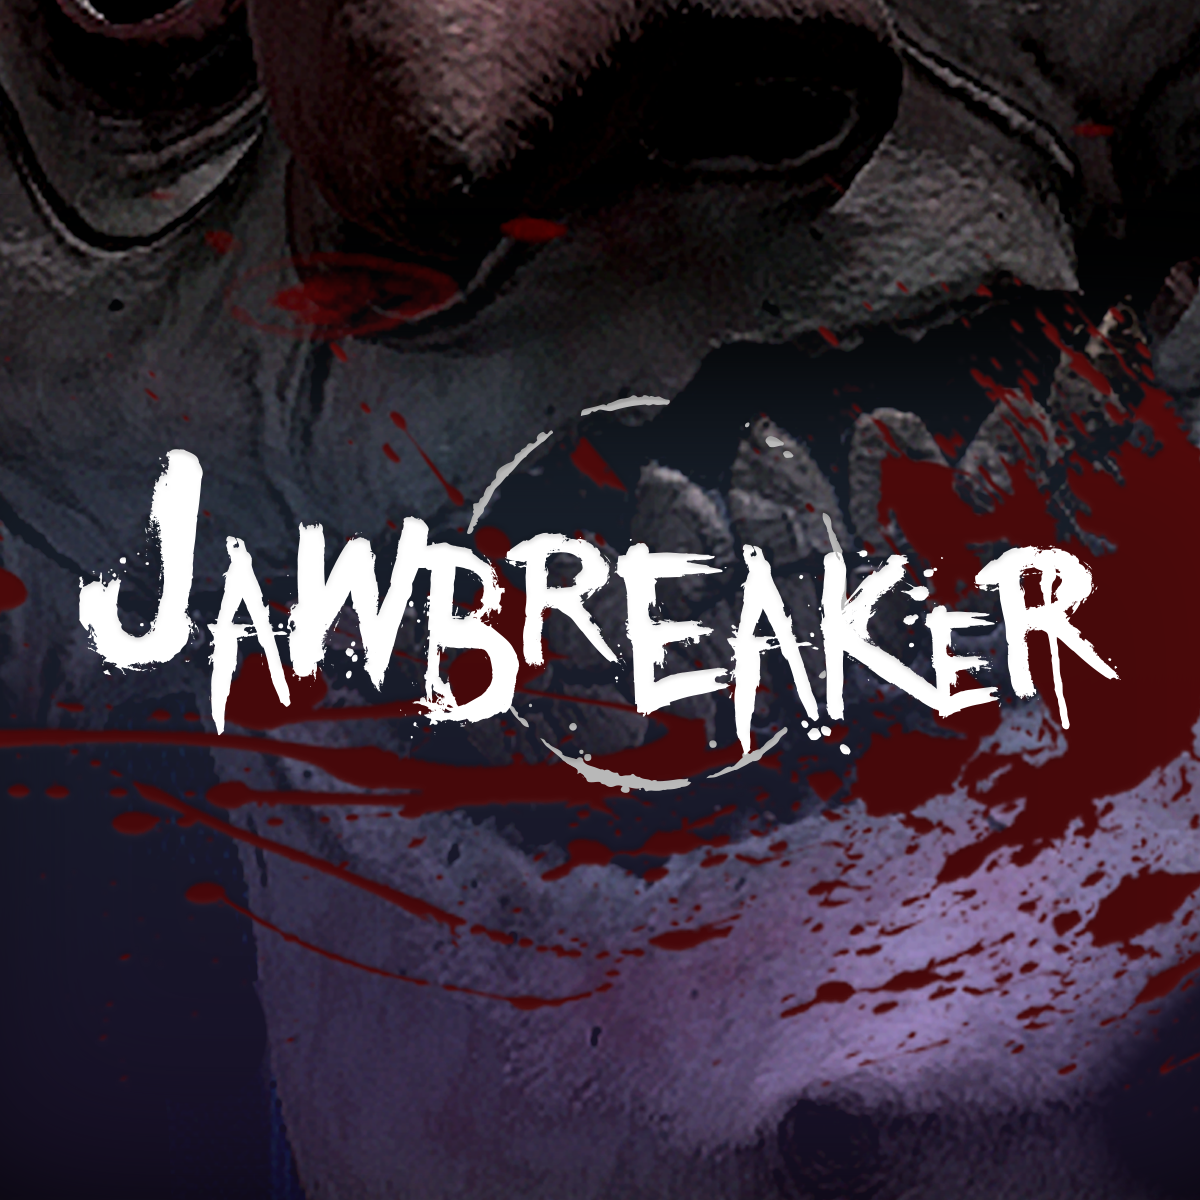 Jawbreaker capsule image 1200x1200